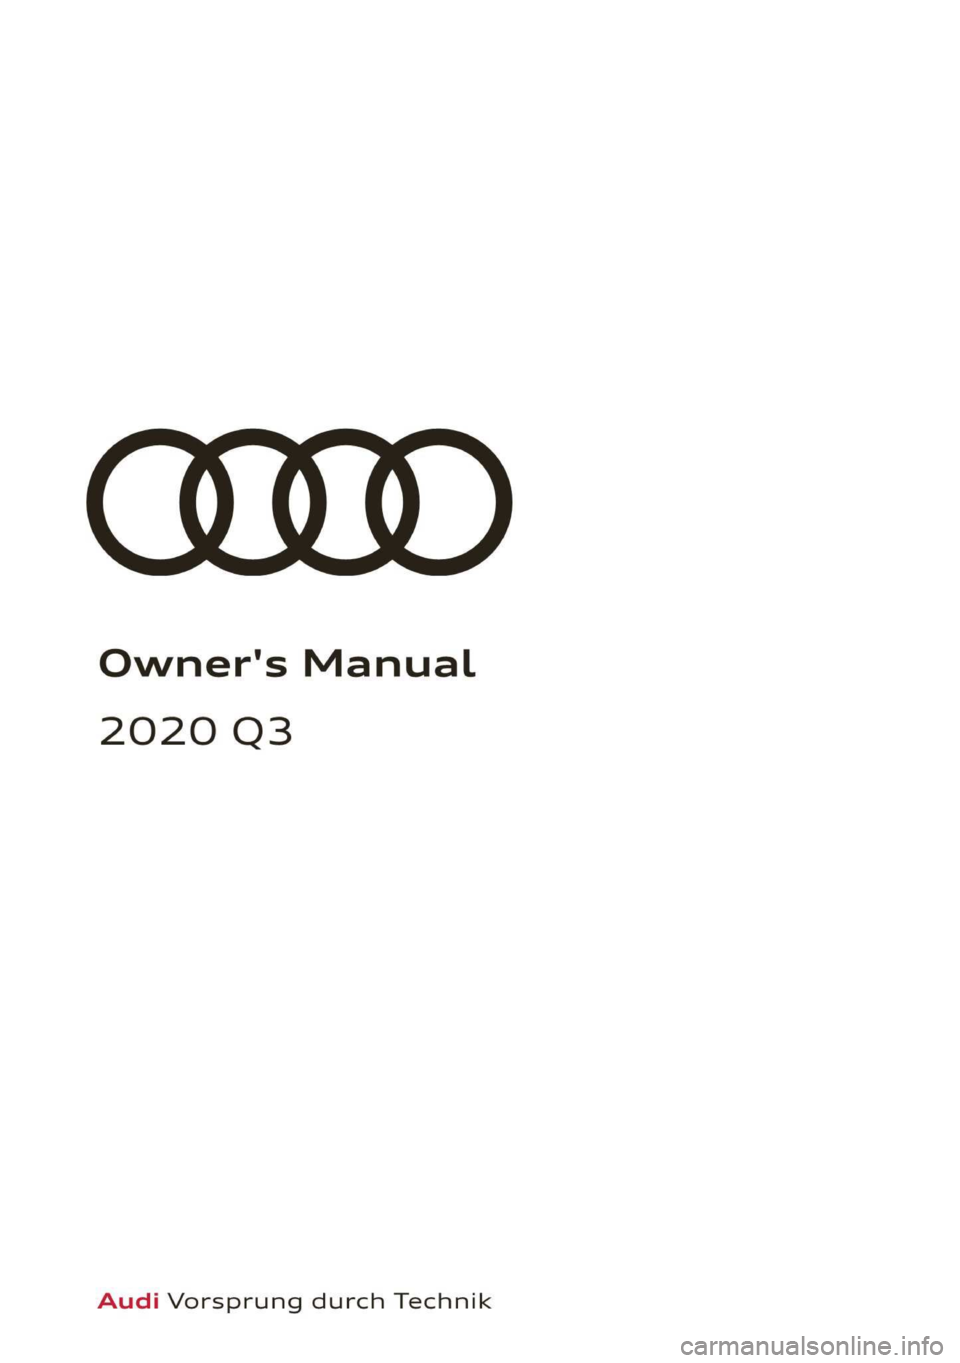 AUDI Q3 2020  Owners Manual Owner's Manual 
2020 Q3 
Audi Vorsprung durch Technik  